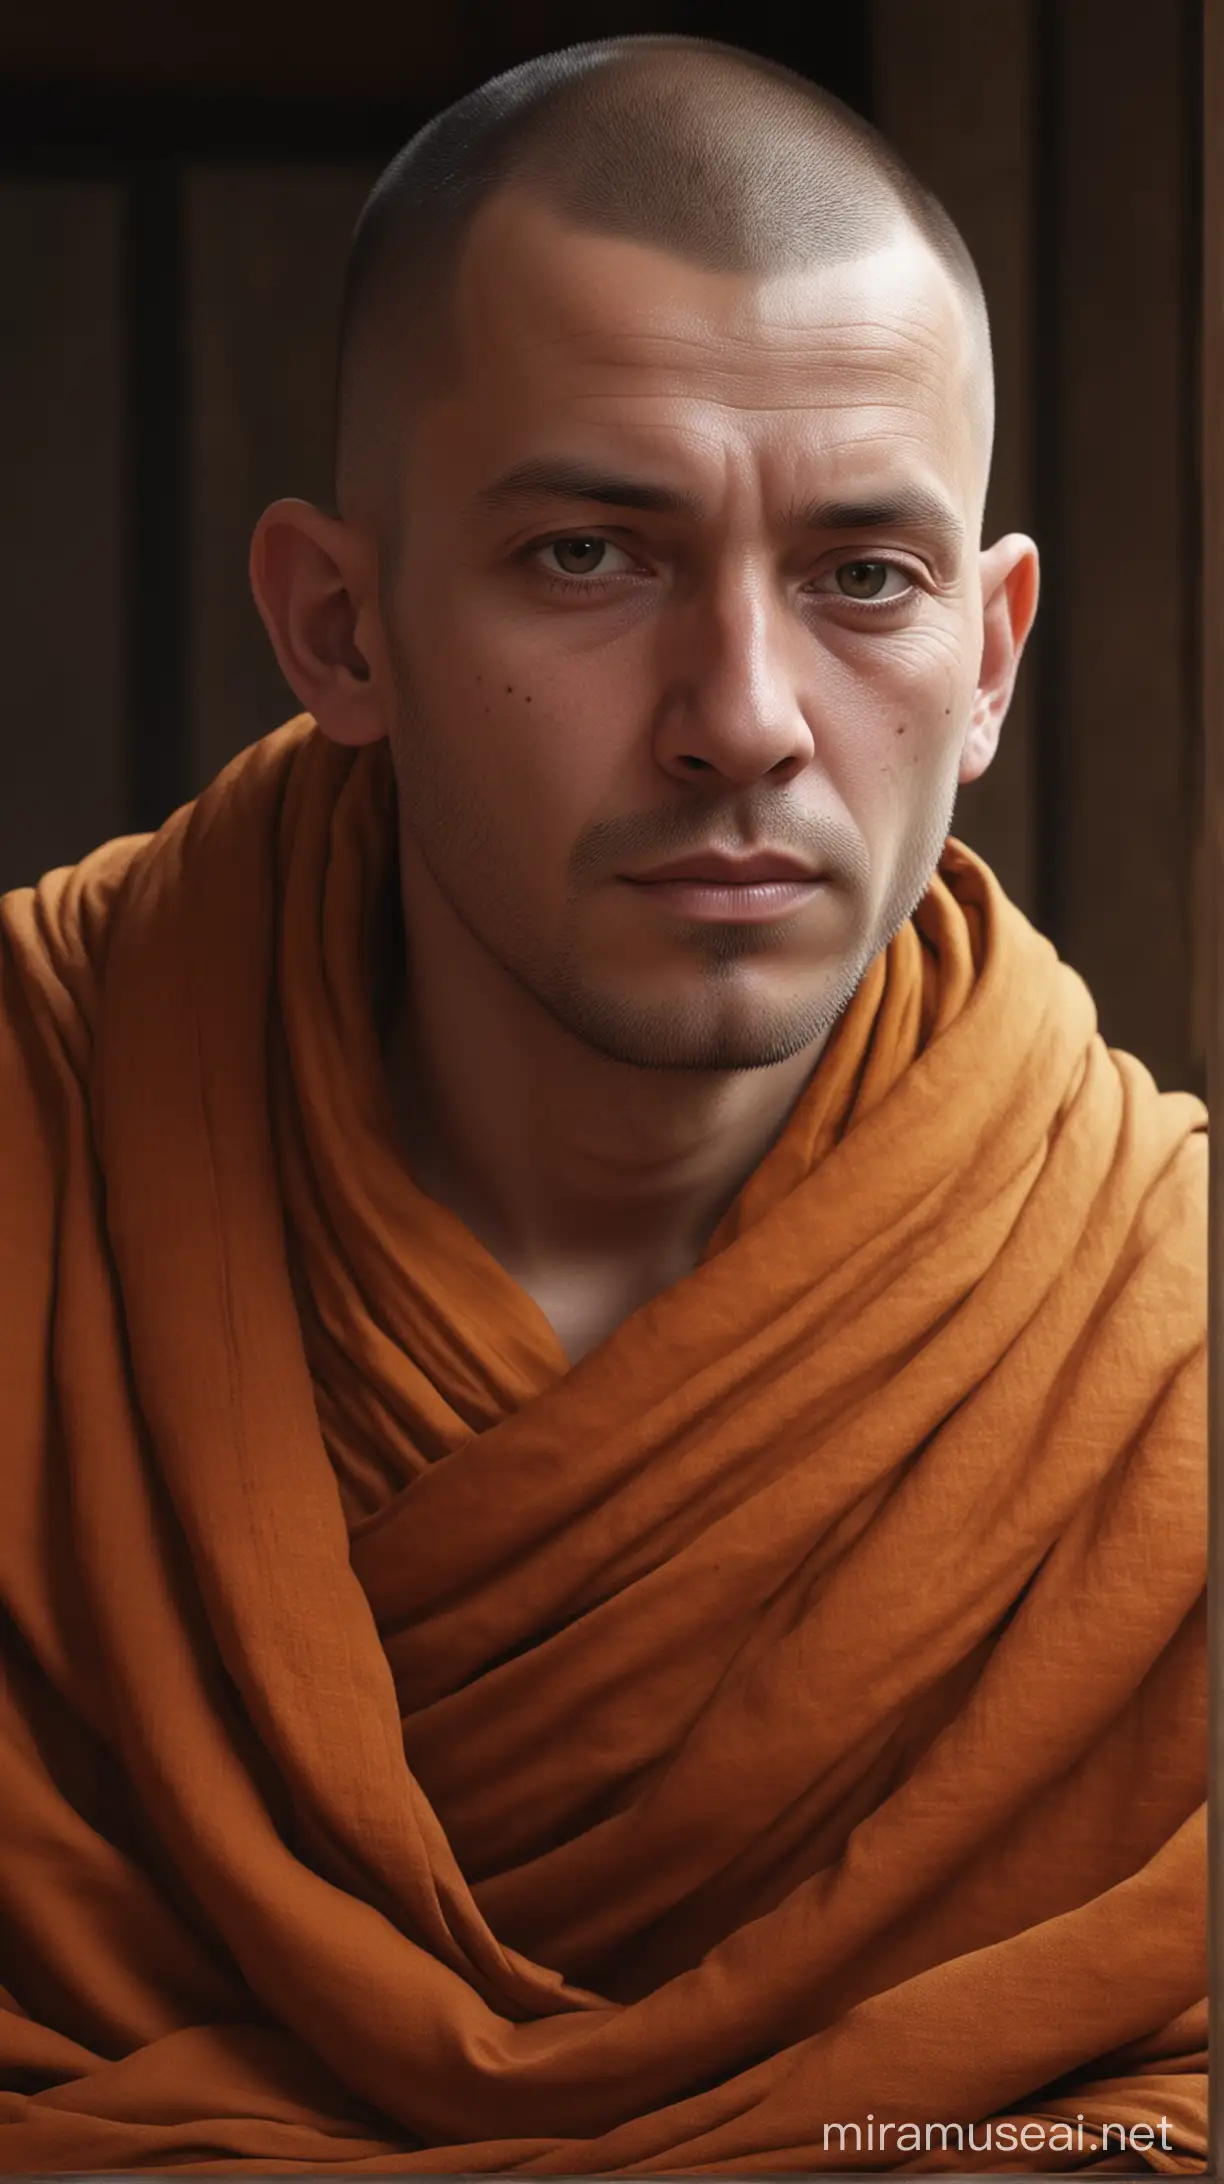 Monk in Tranquil Meditation CloseUp Realistic Portrait